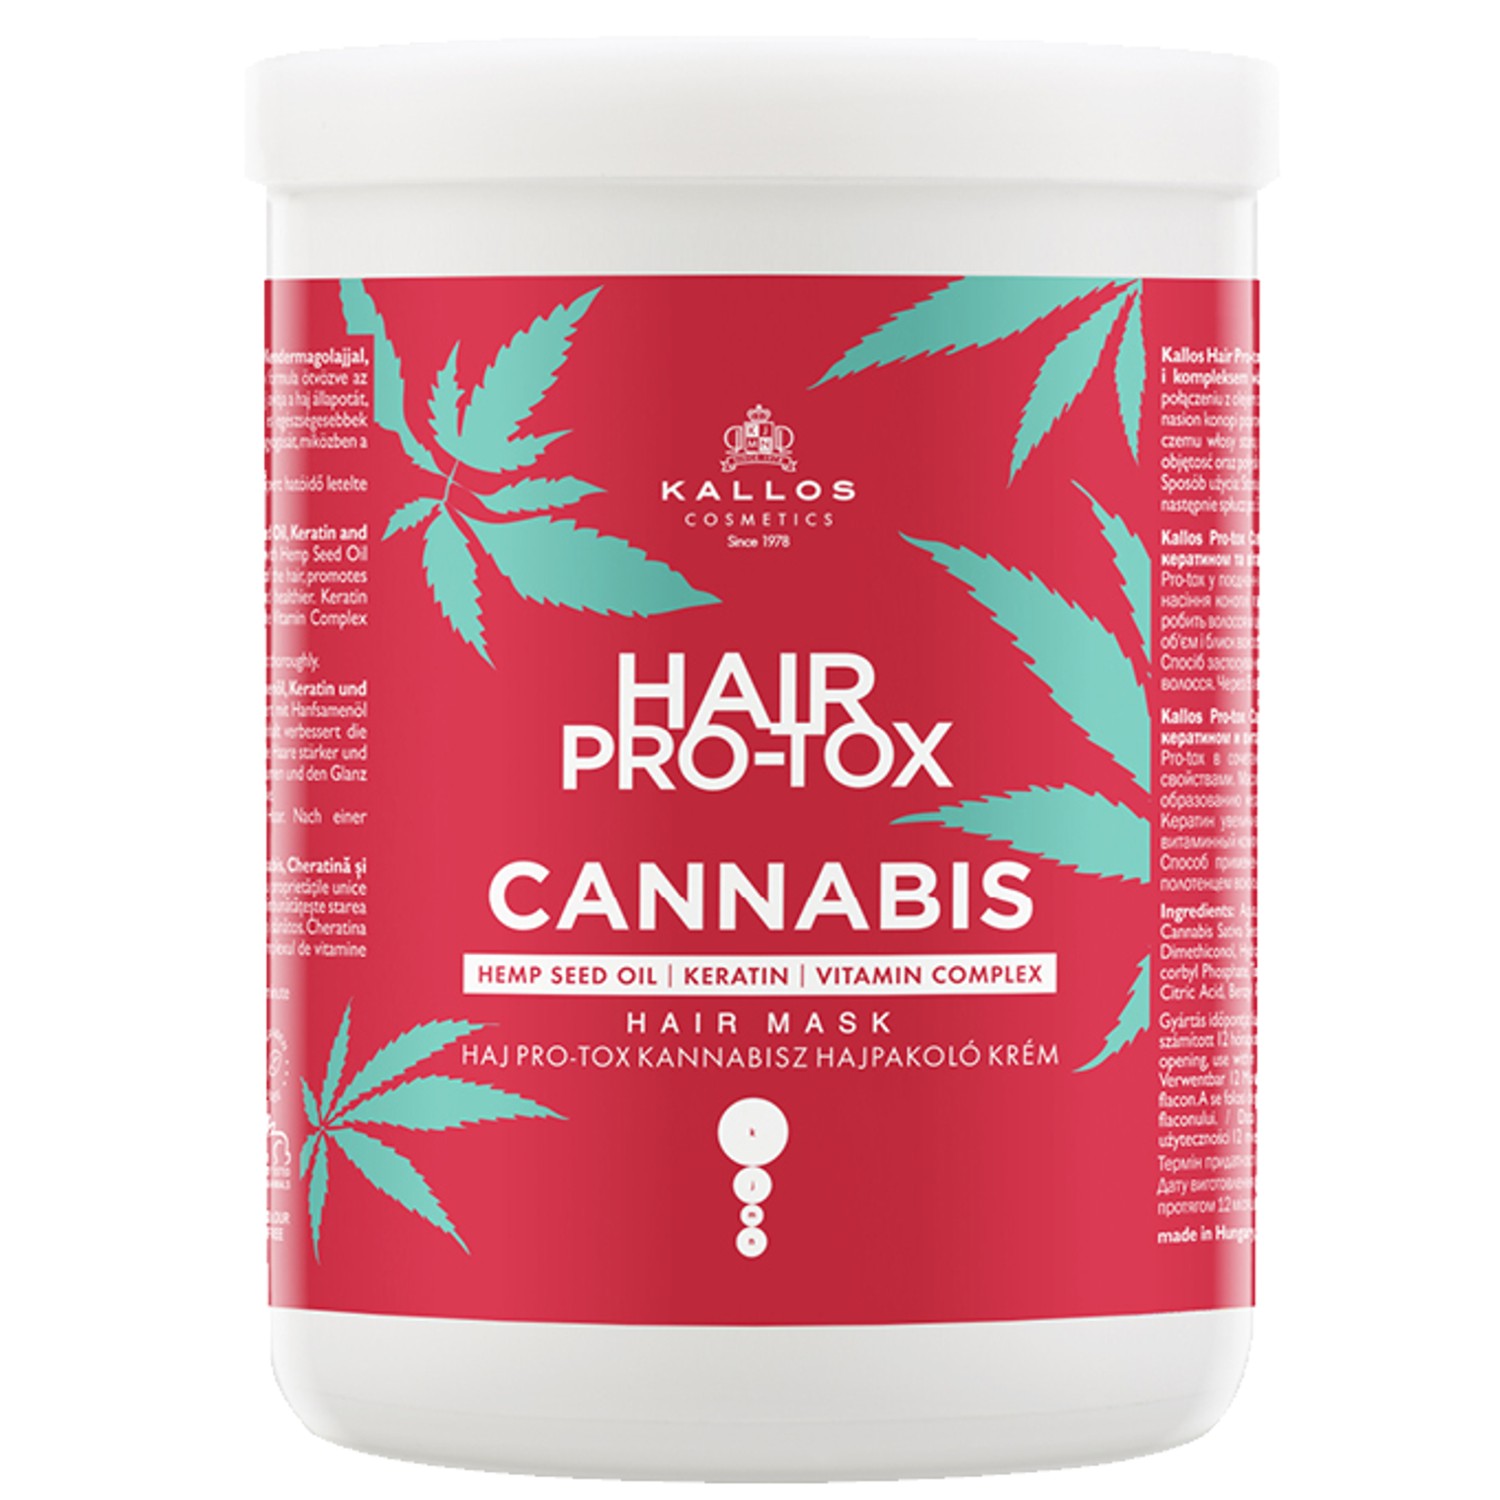 KALLOS COSMETICS KJMN Hair Pro-Tox Cannabis Hair Mask 1 L